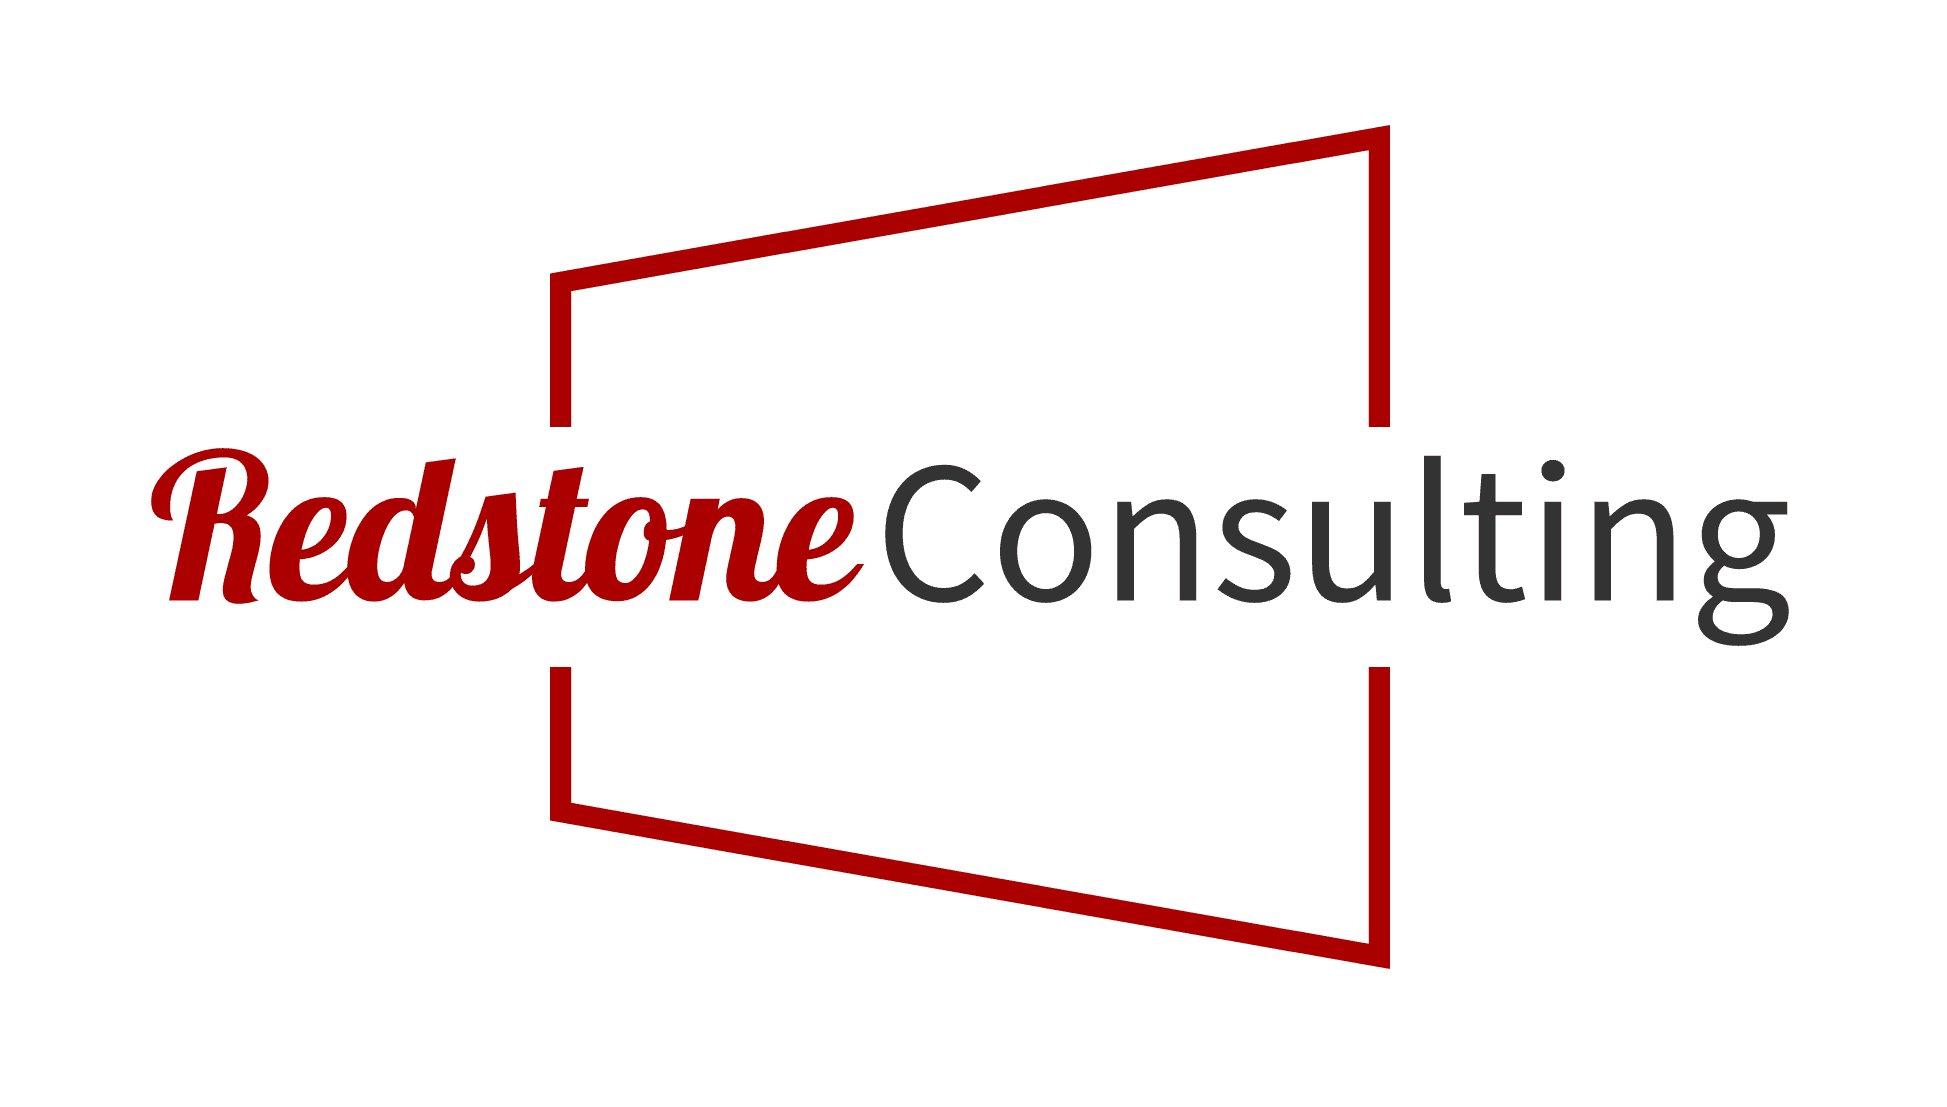 Redstone Consulting